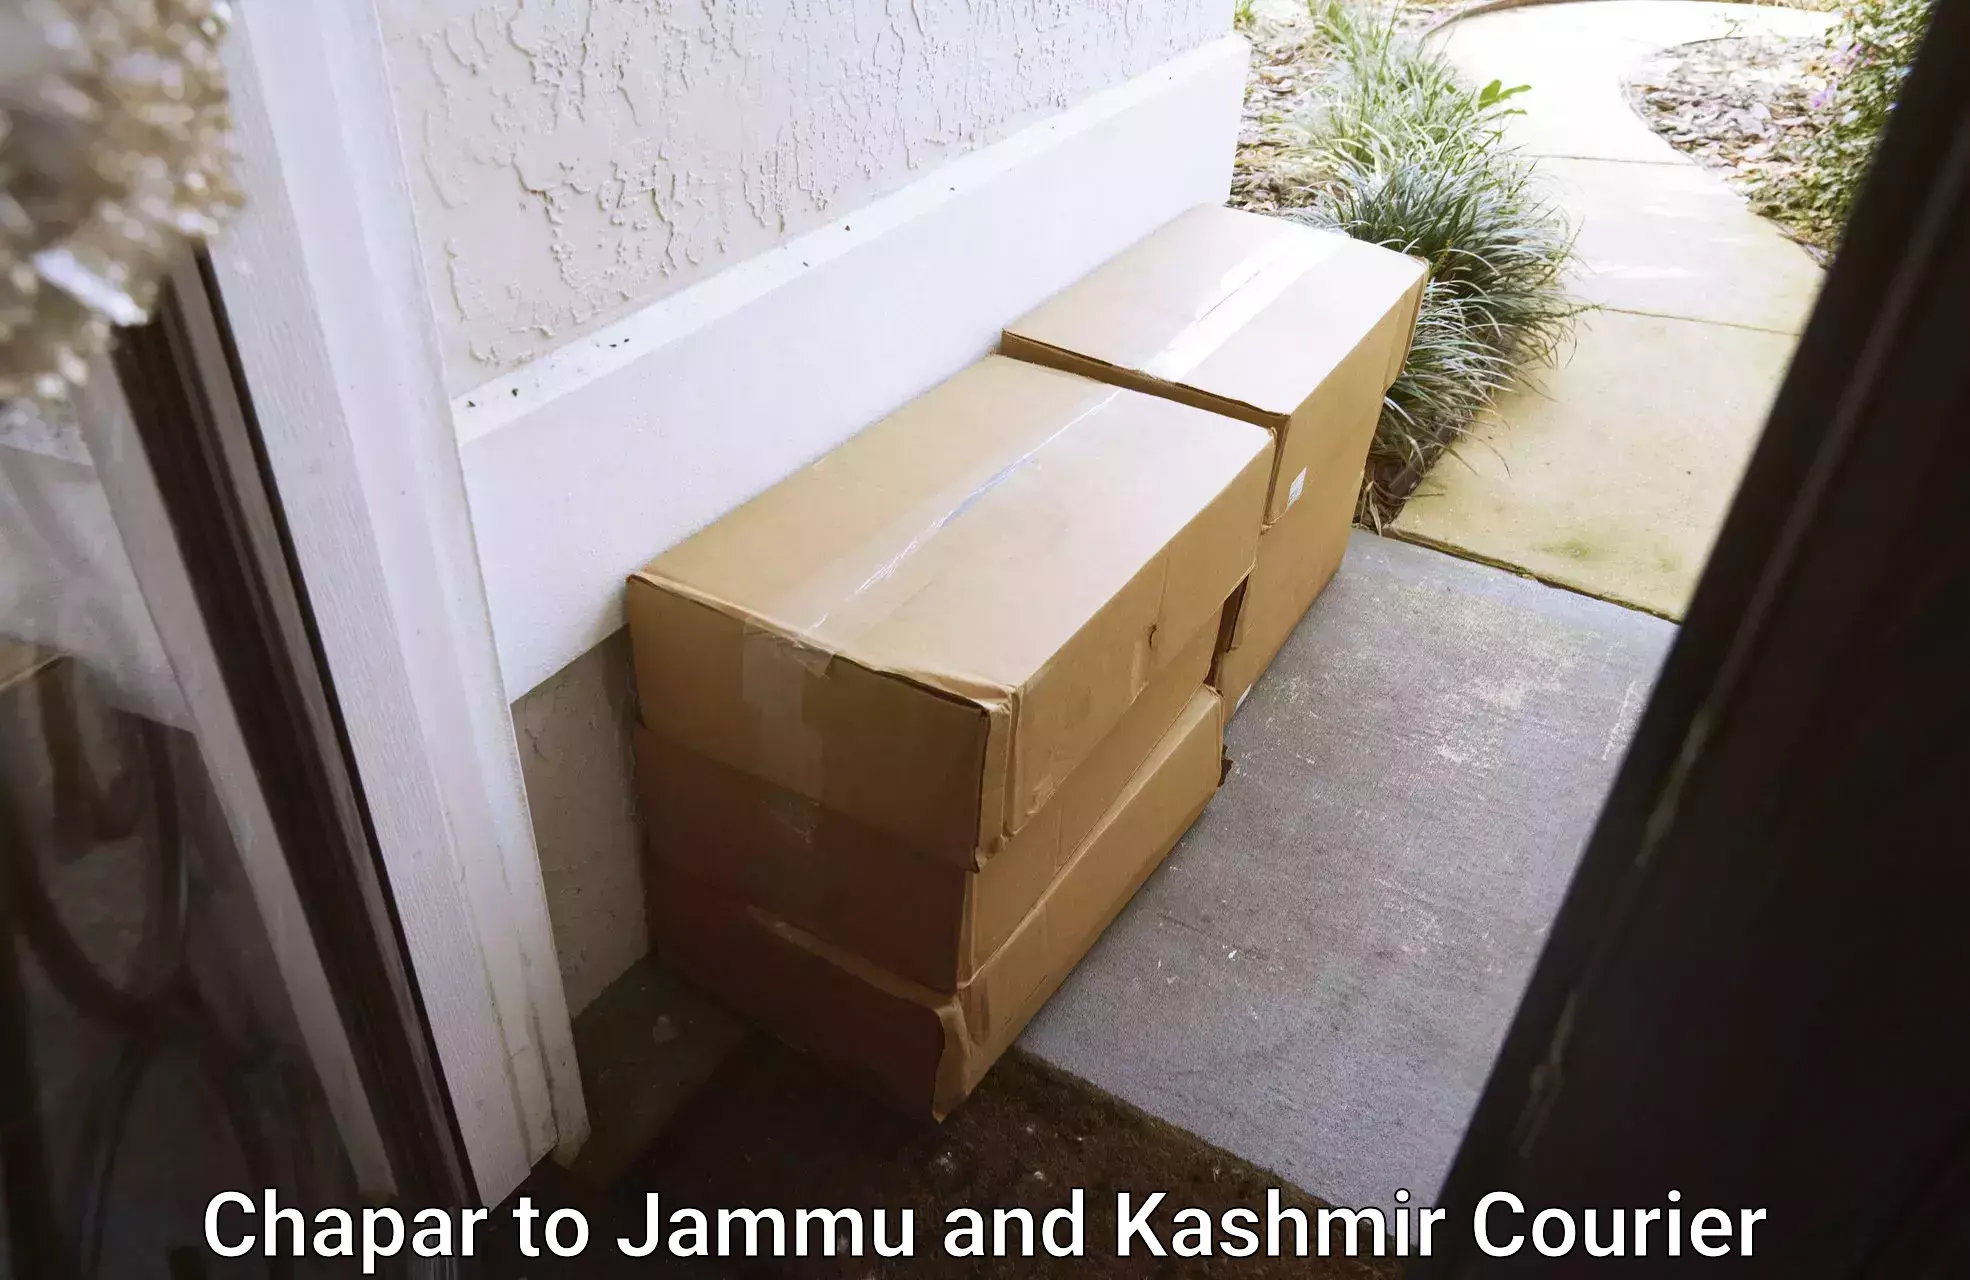 24-hour courier service Chapar to Billawar